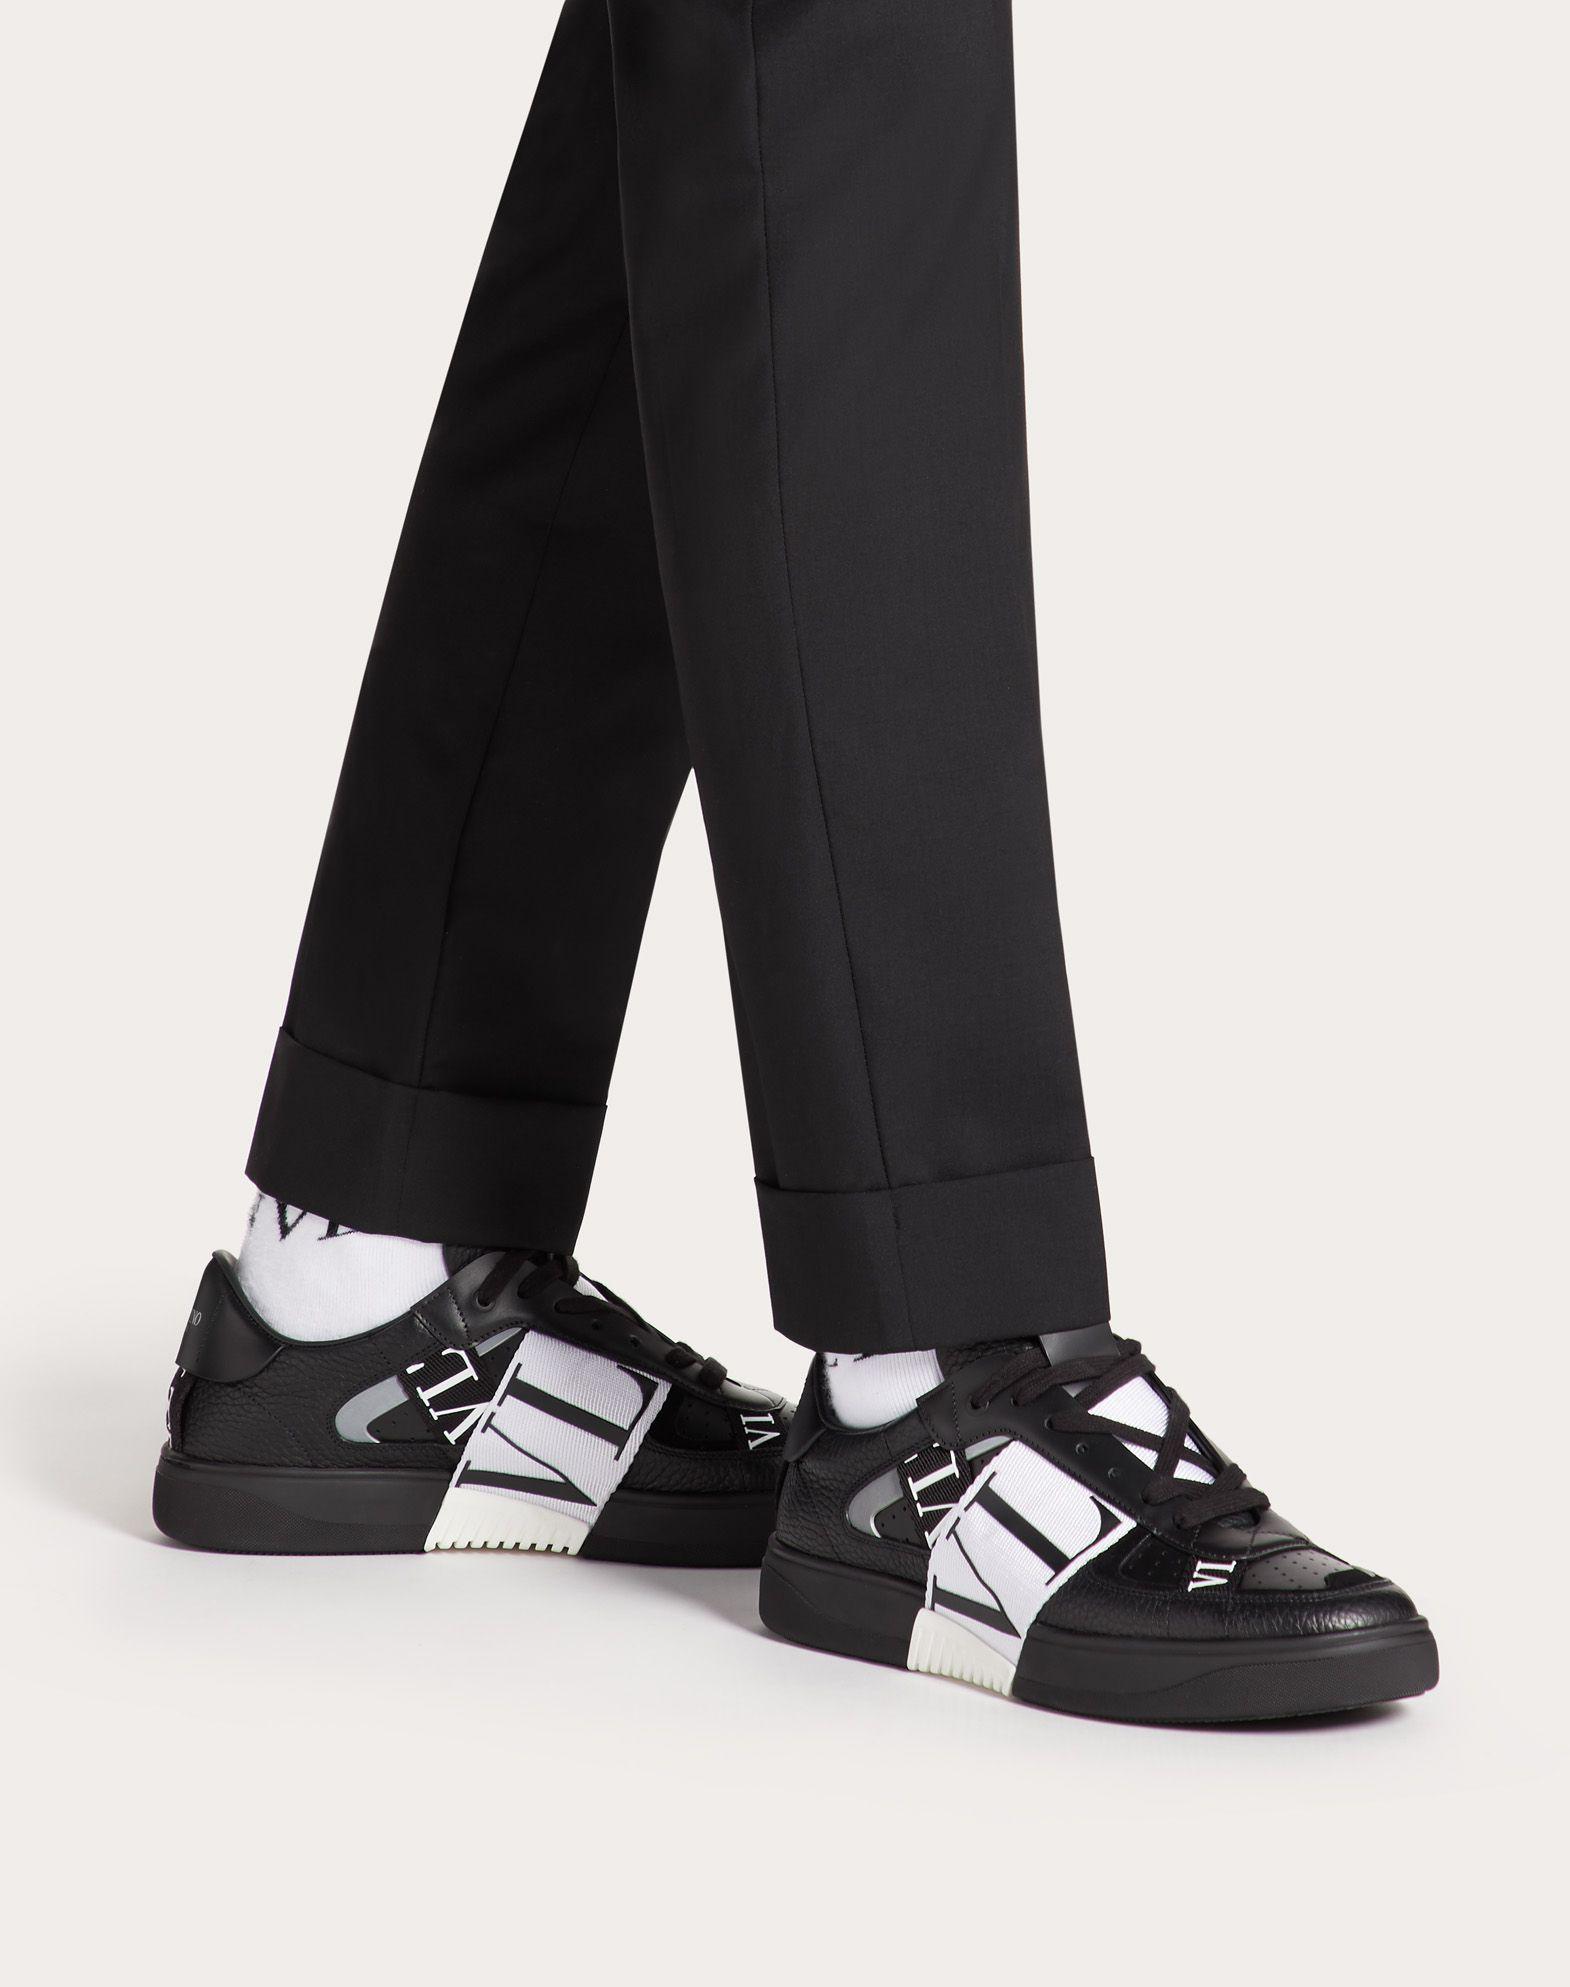 Valentino Garavani Rubber Vl7n Banded Sneakers in Black/White (Black) for  Men - Lyst